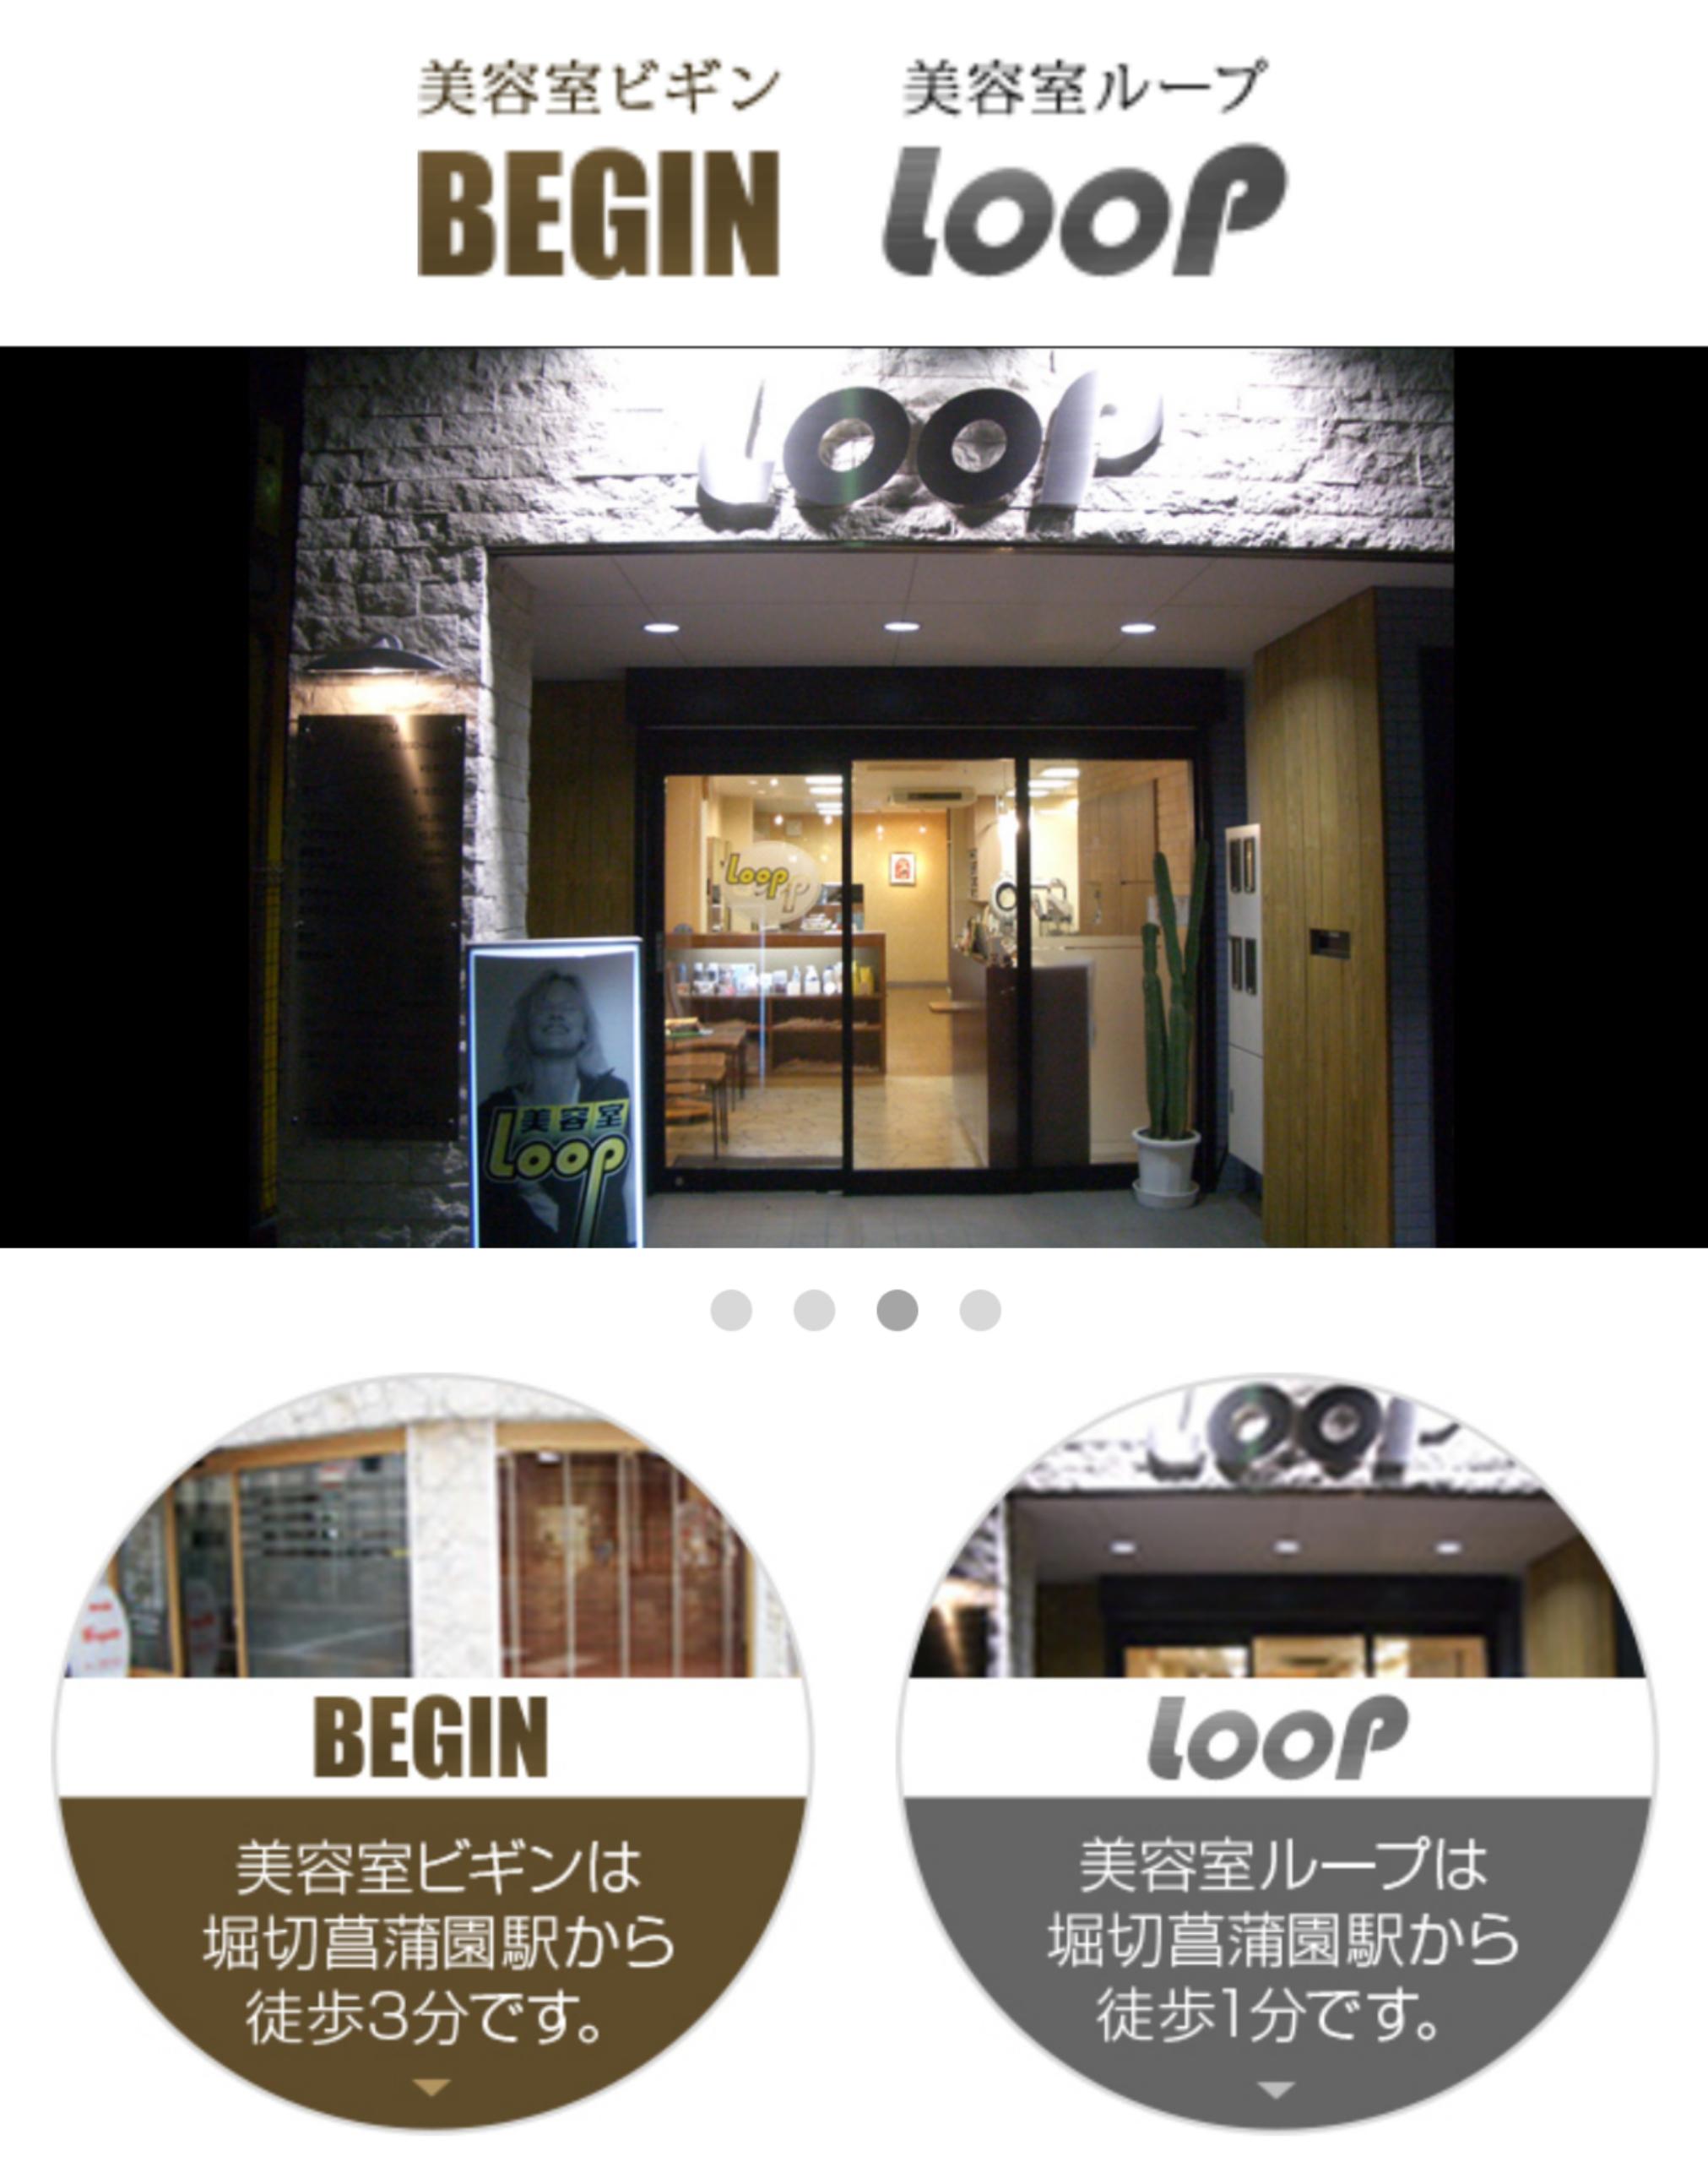 Begin Loop アシスタント募集 東京都 アシスタント 美容室ビギン エアジョブツアー Air Job Tour